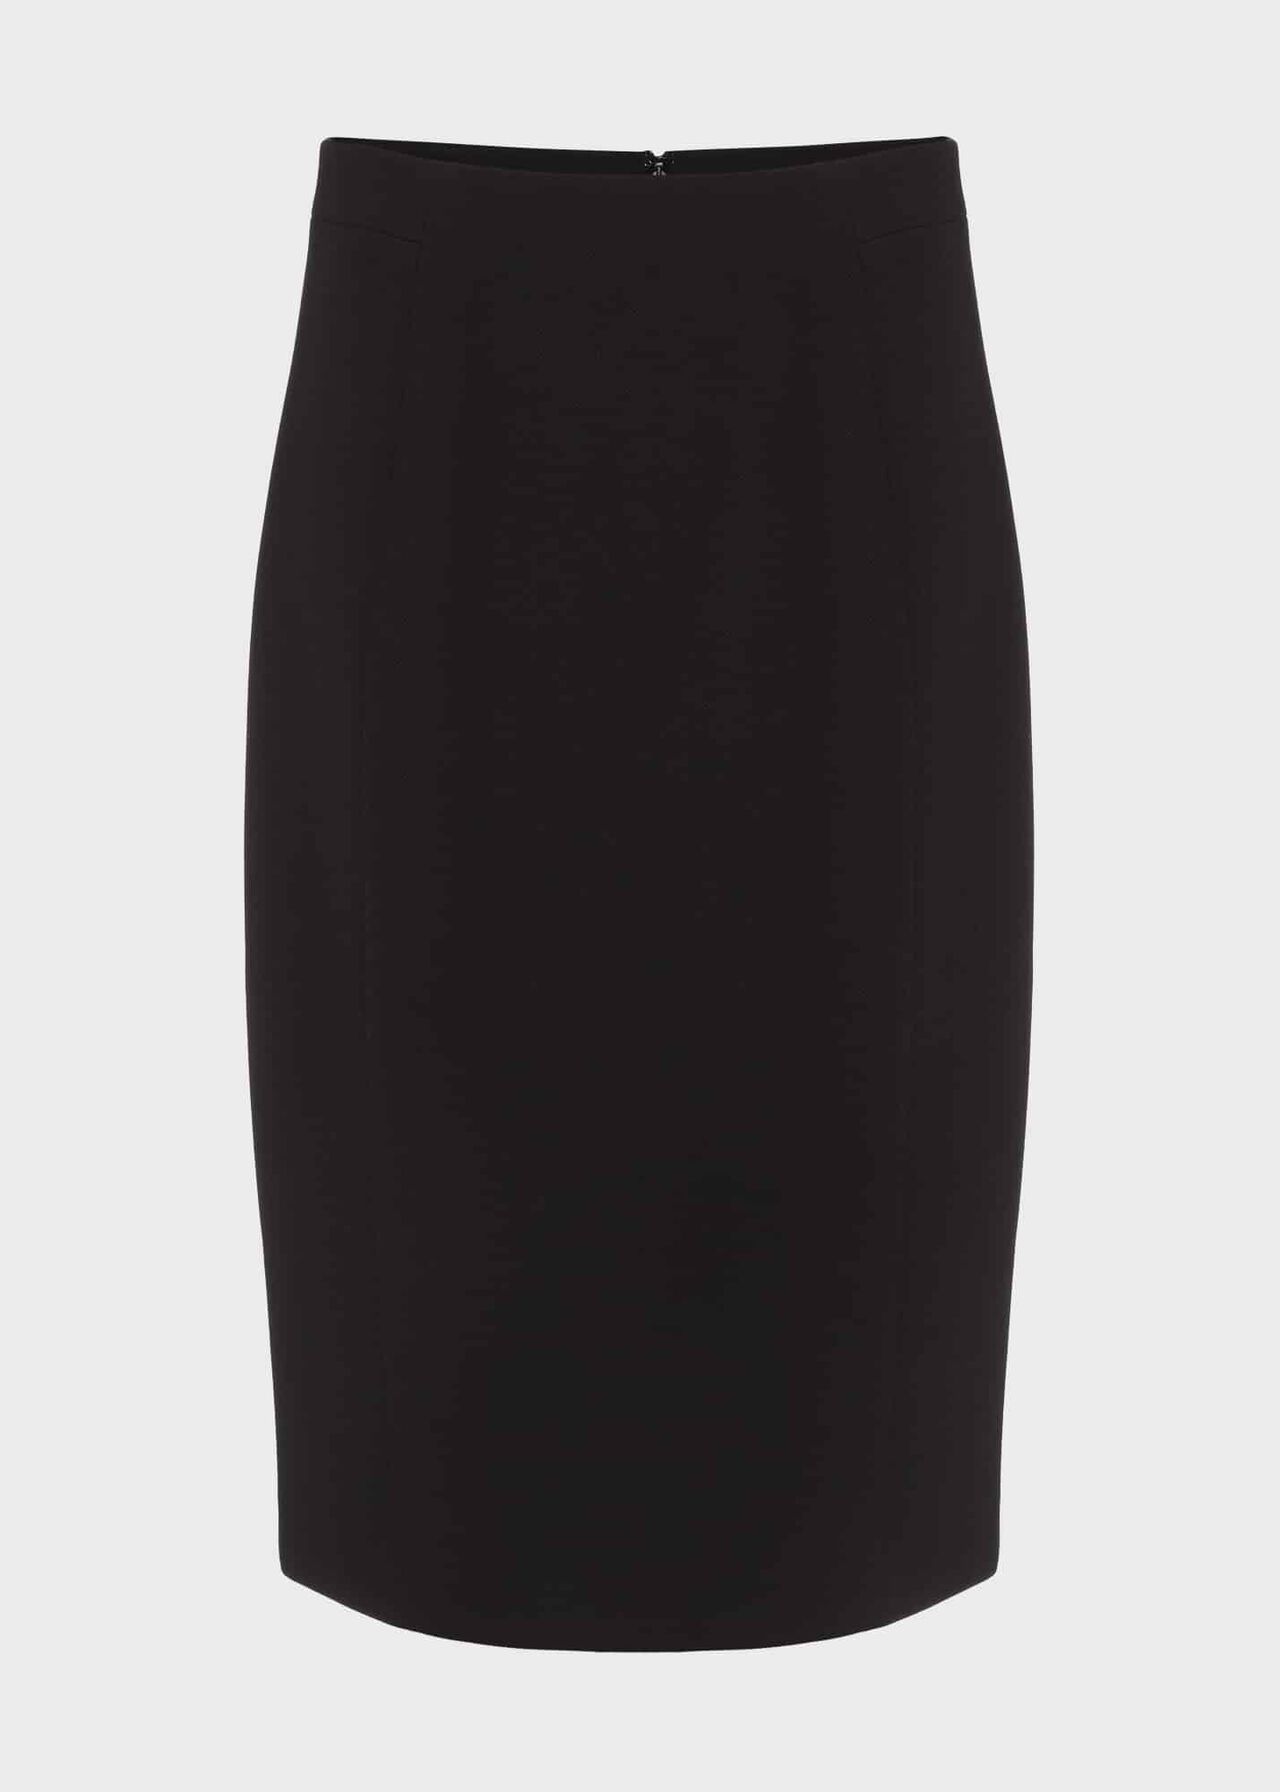 Petite Ophelia Skirt, Black, hi-res